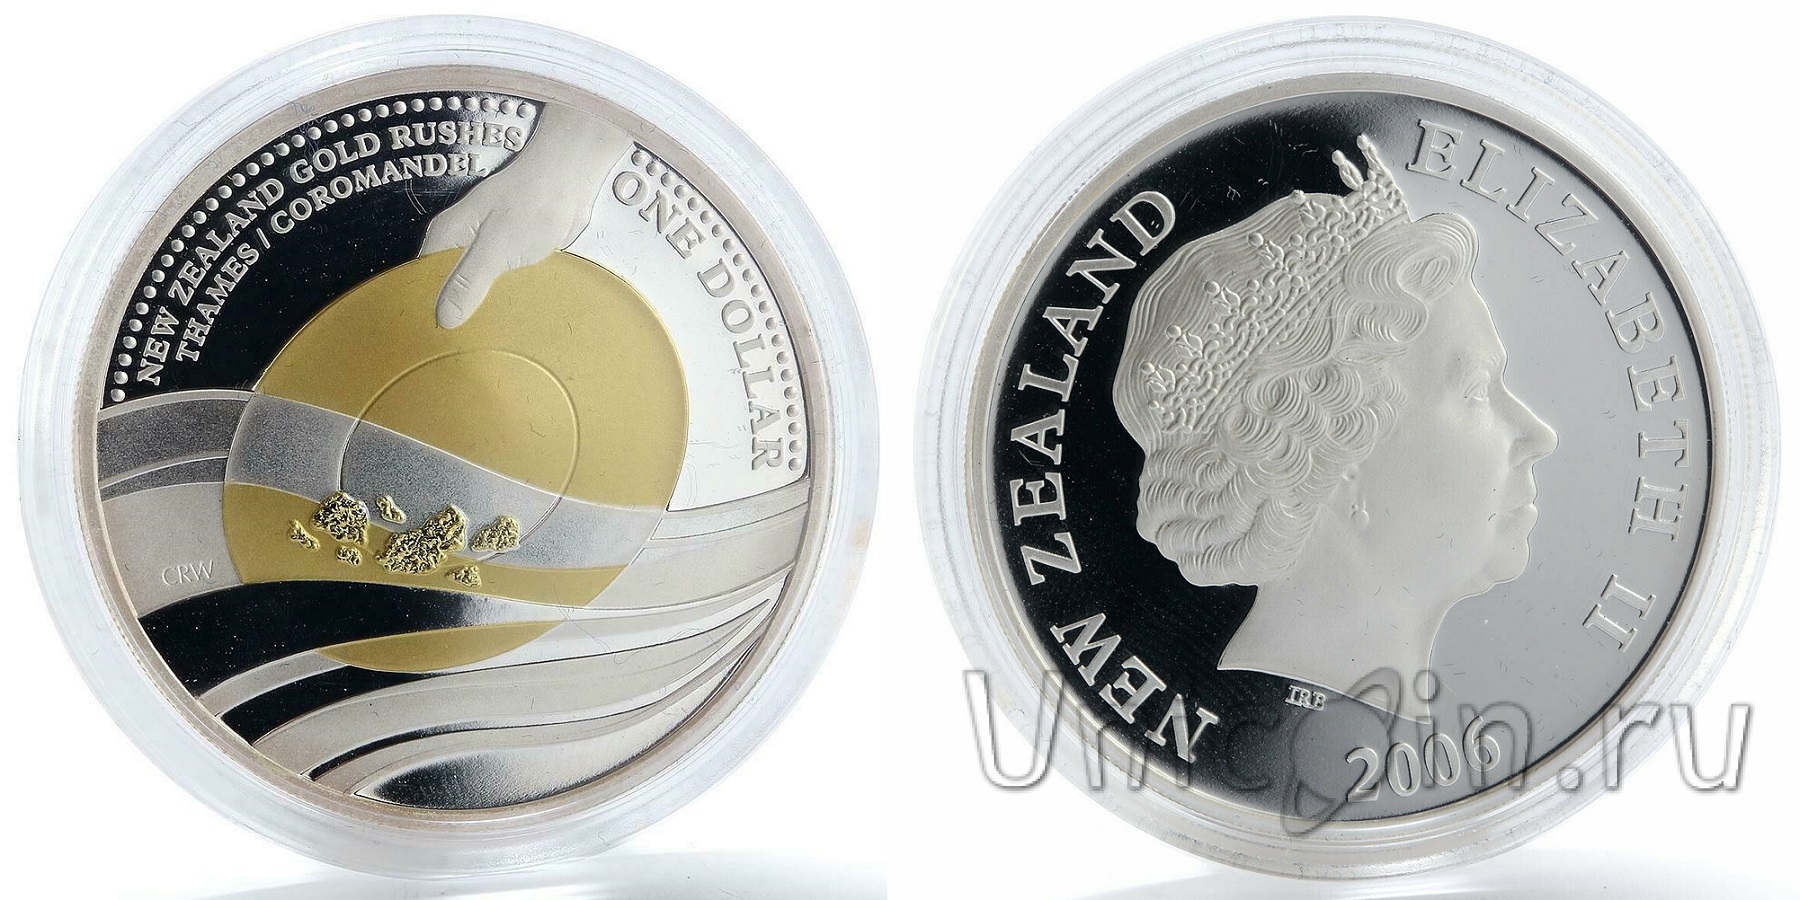 1 доллар 2006. Монета 1 доллар новая Зеландия 1996г. 10 Долларов 2006 года b2. Султанат Окусси-Амбено 50 долларов 2006.